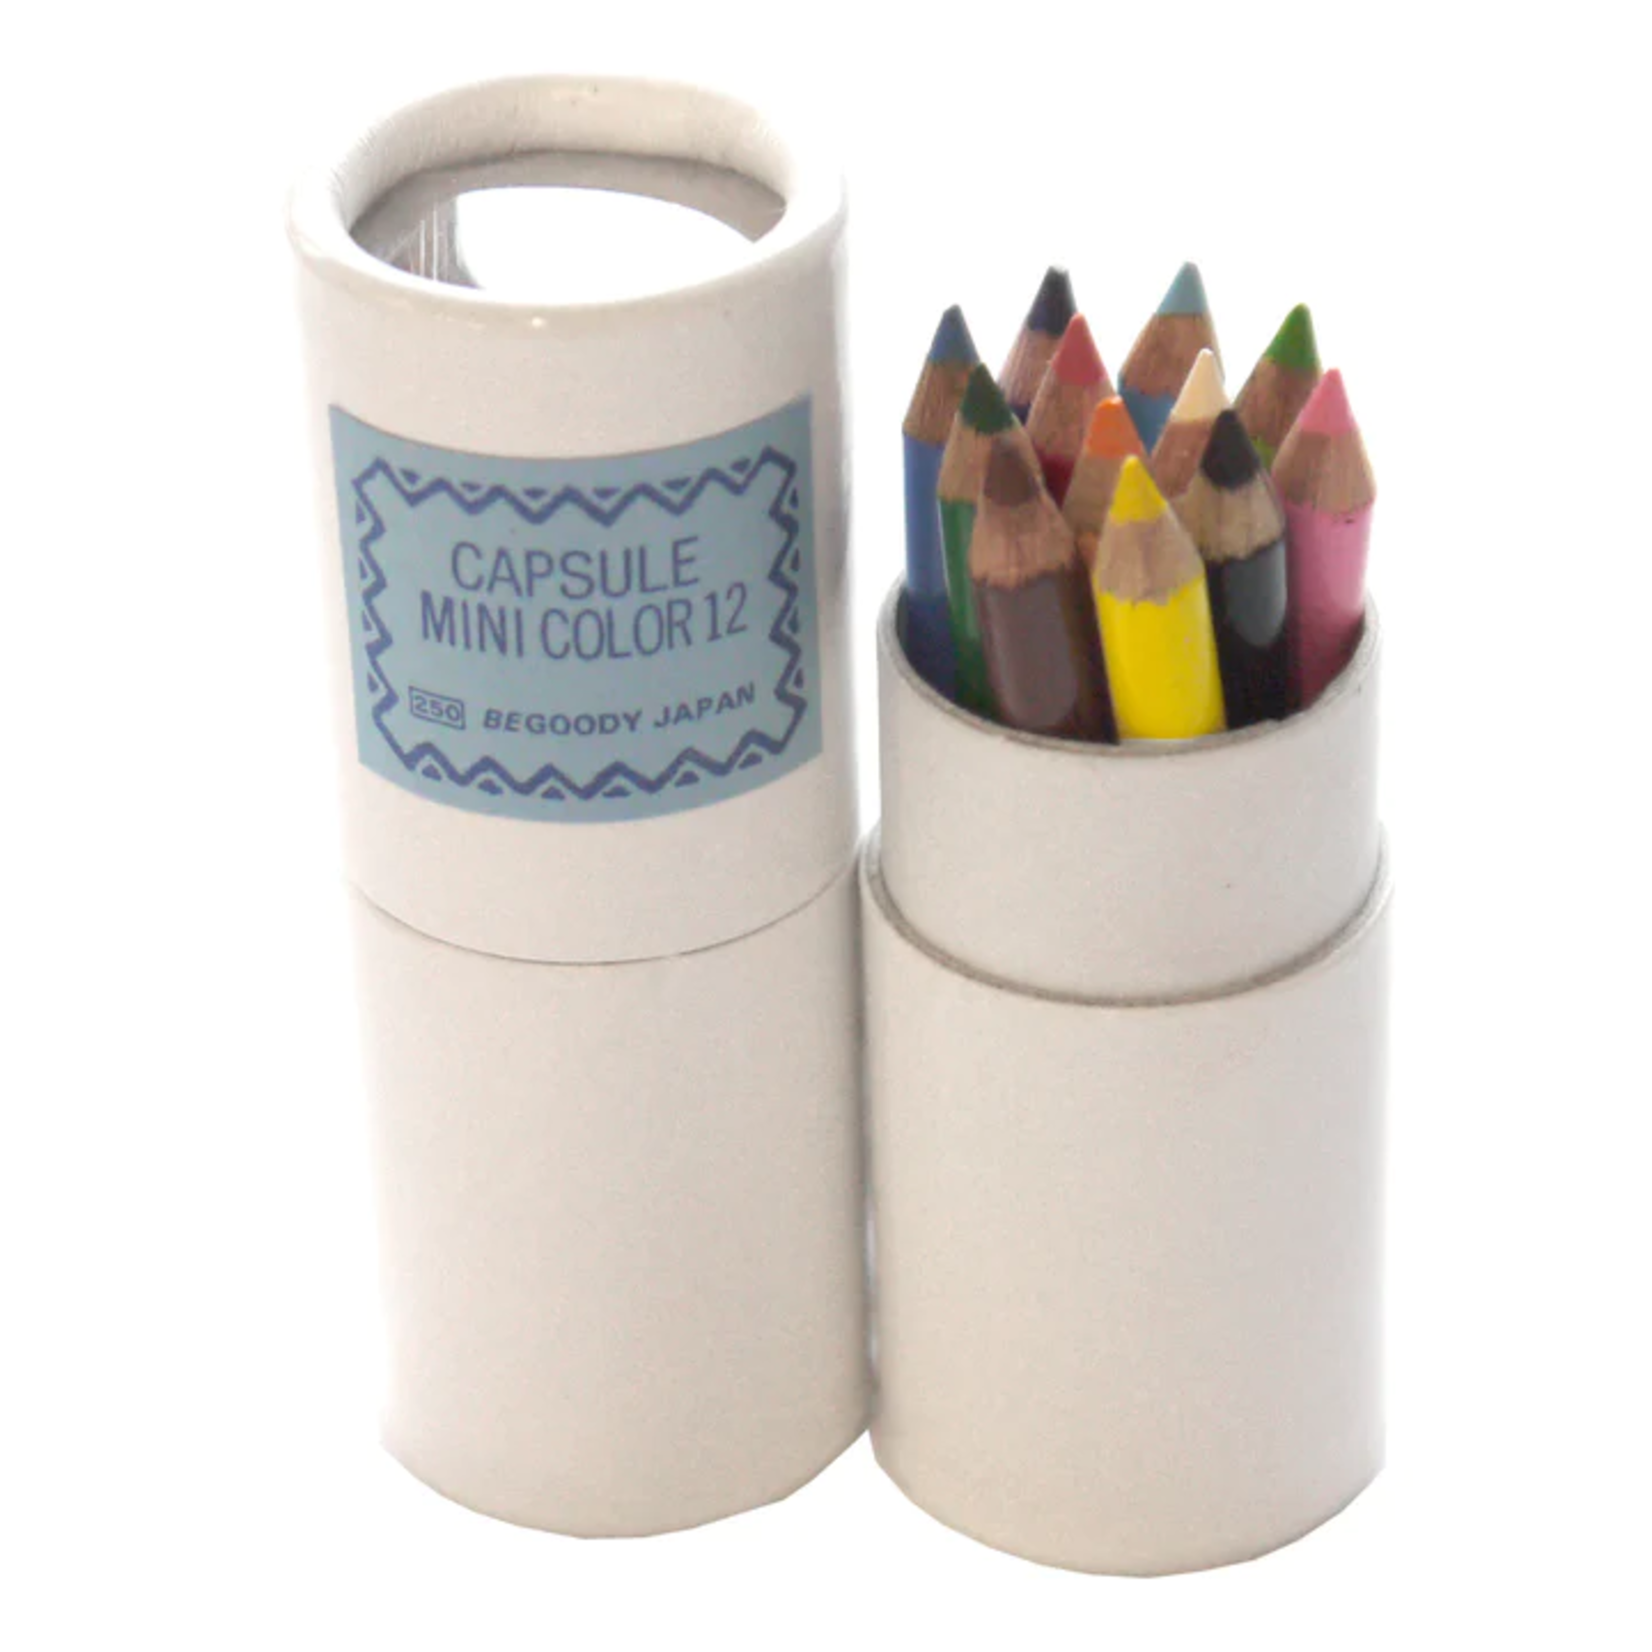 Begoody Capsule Mini Color Pencils 12